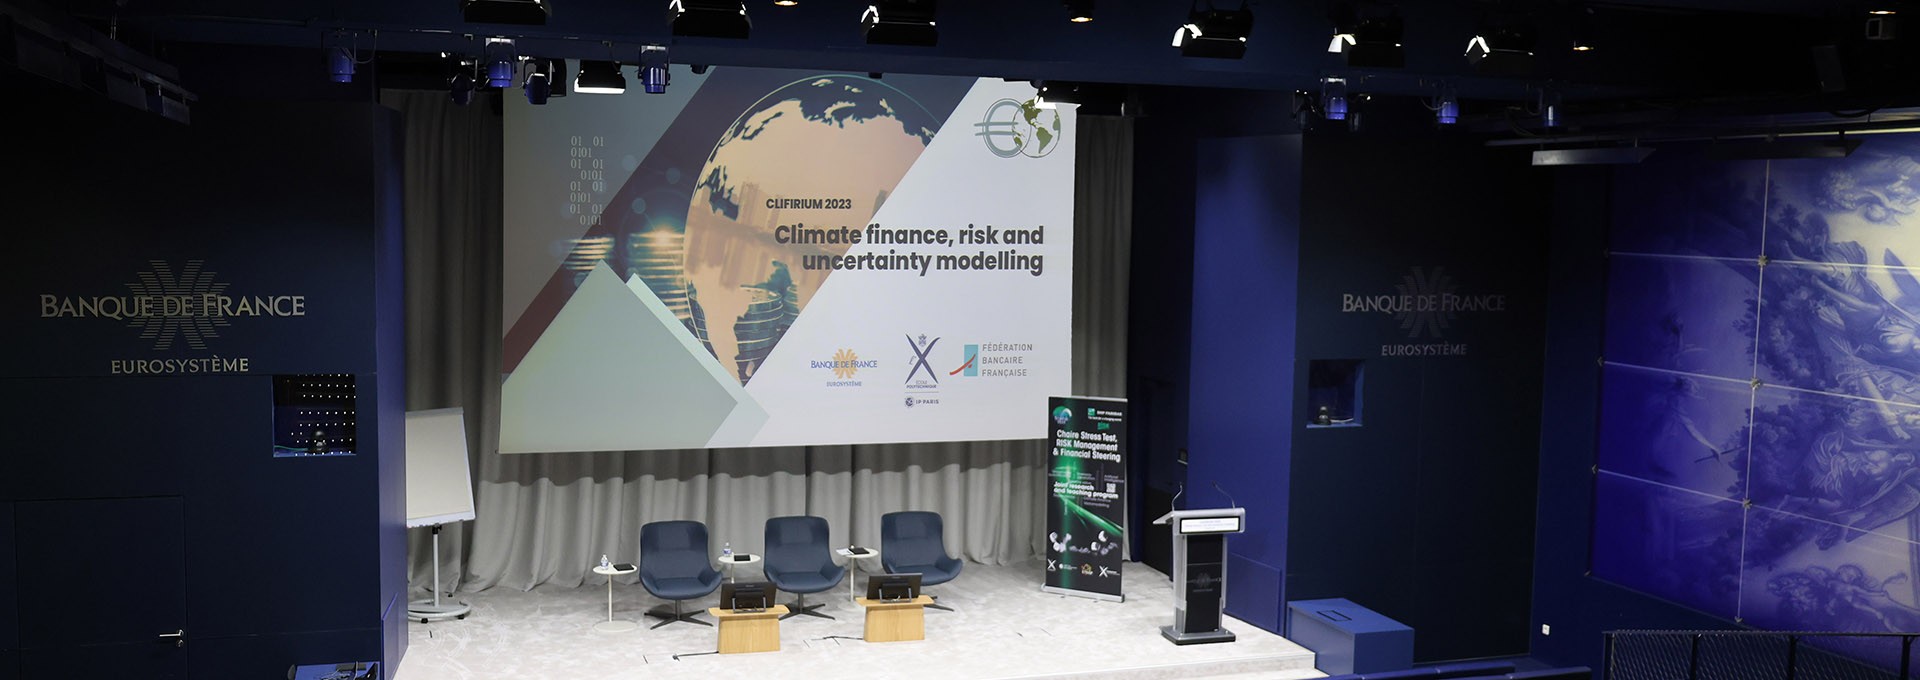 CLIFIRIUM: a multidisciplinary conference on climate economics